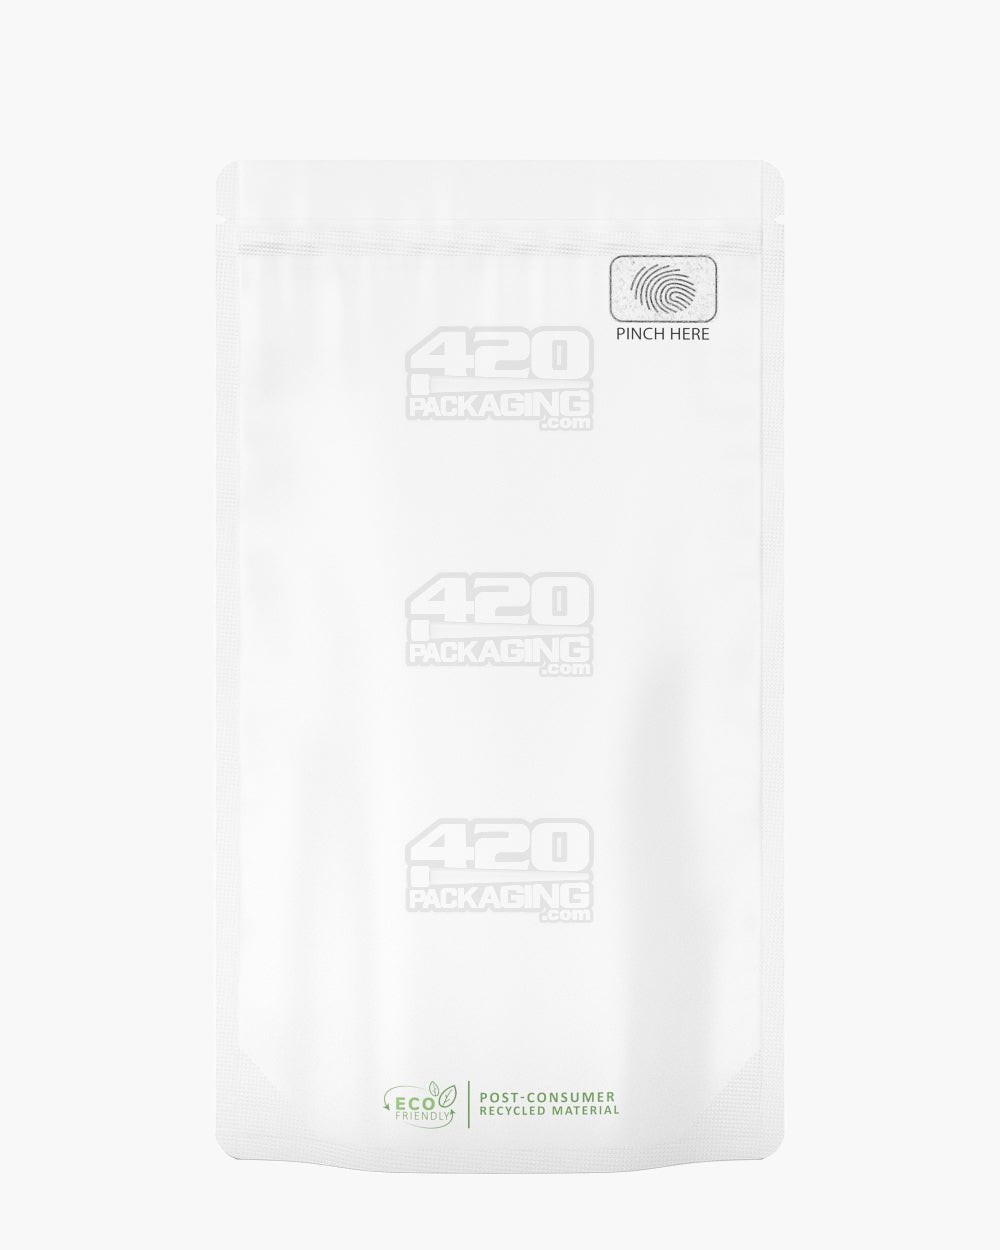 Matte-White 5" x 8.8" PCR Mylar Child Resistant Tamper Evident Bags (14 grams) 250/Box - 2